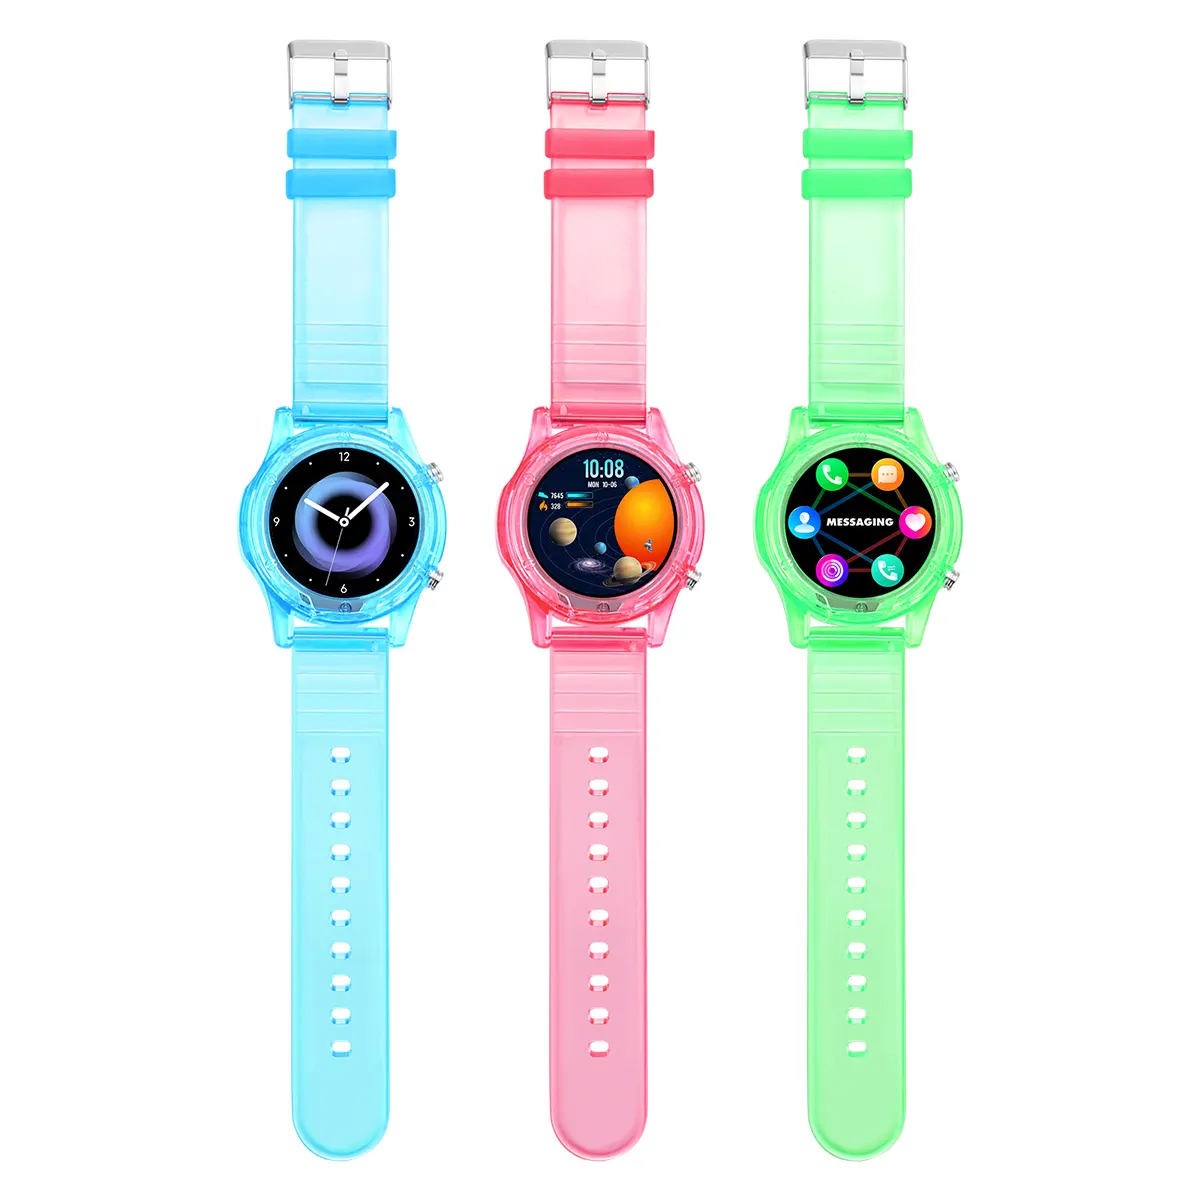 S10 Smartwatch Fashion Gift Silicone Color Light multi lingual Broadcasting Digital Sport Wrist Watch for Kid Women Girl Men Boy